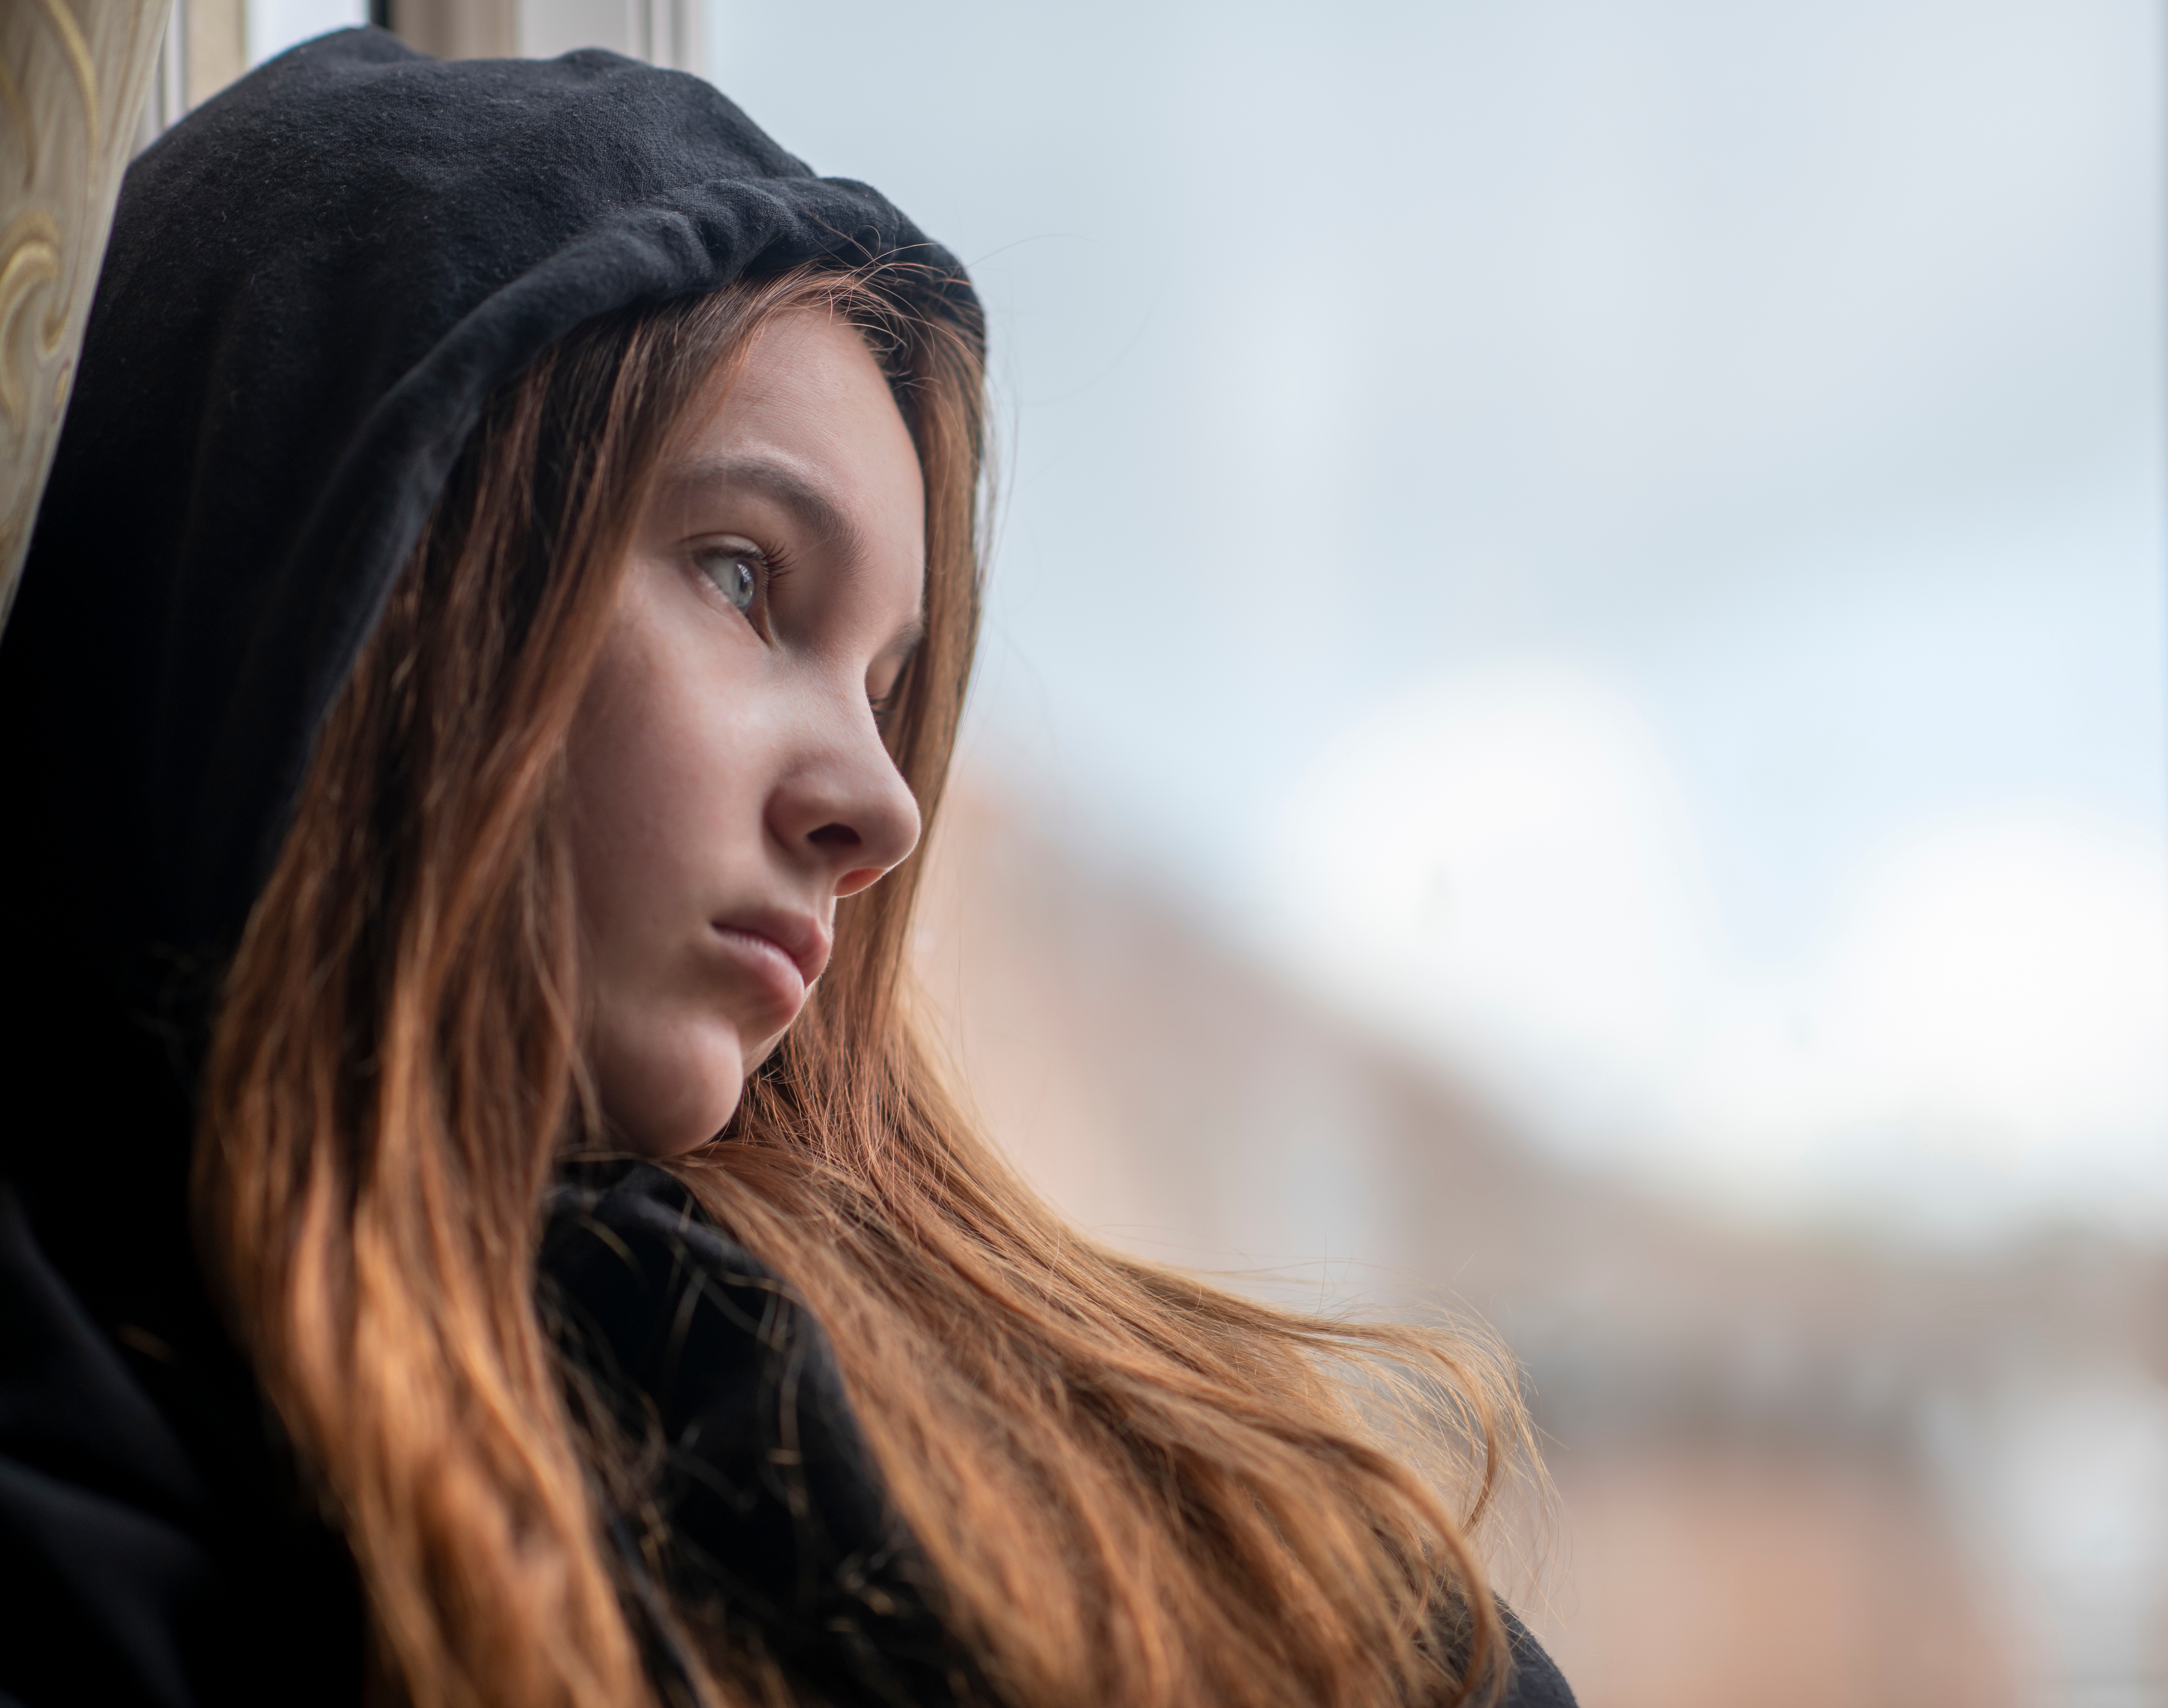 Une adolescente triste qui regarde dehors | Source : Shutterstock